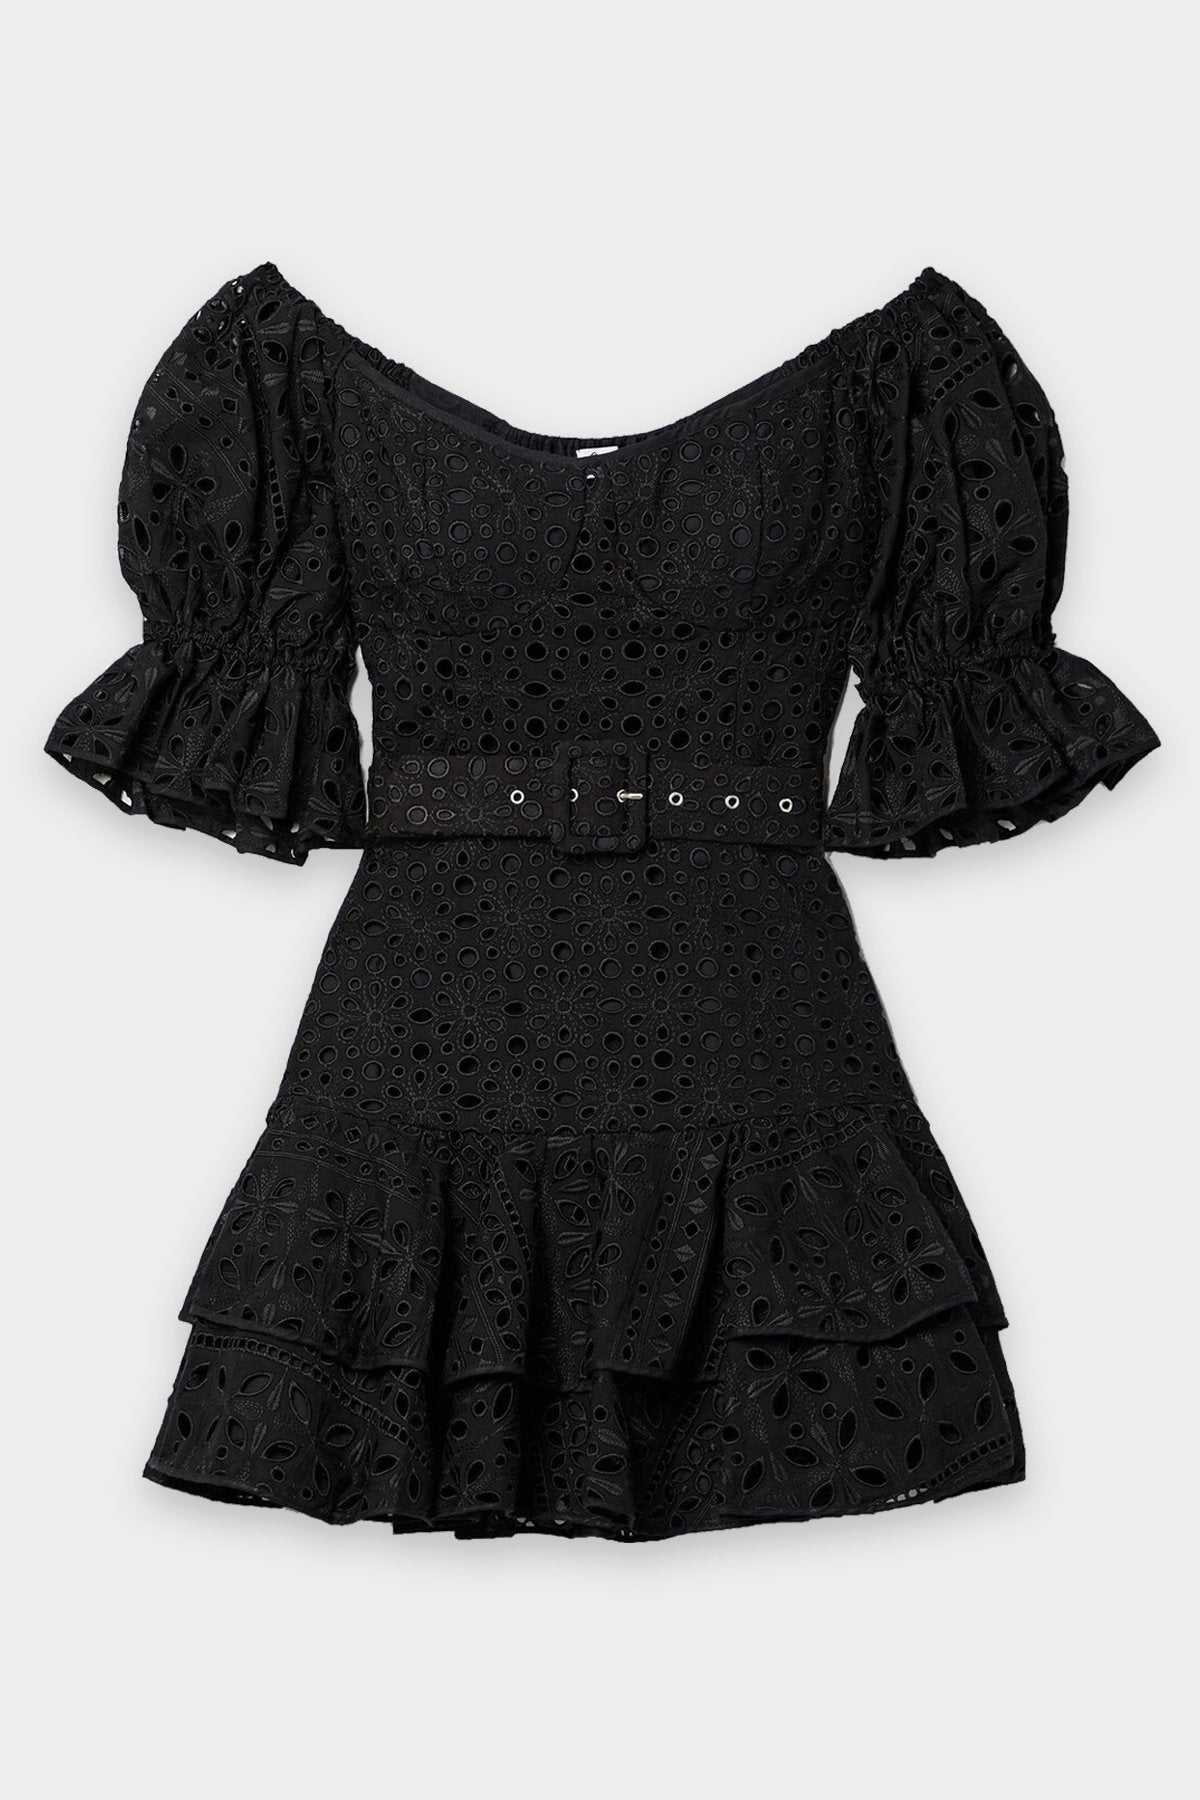 Jean Short Dress in Black - shop-olivia.com